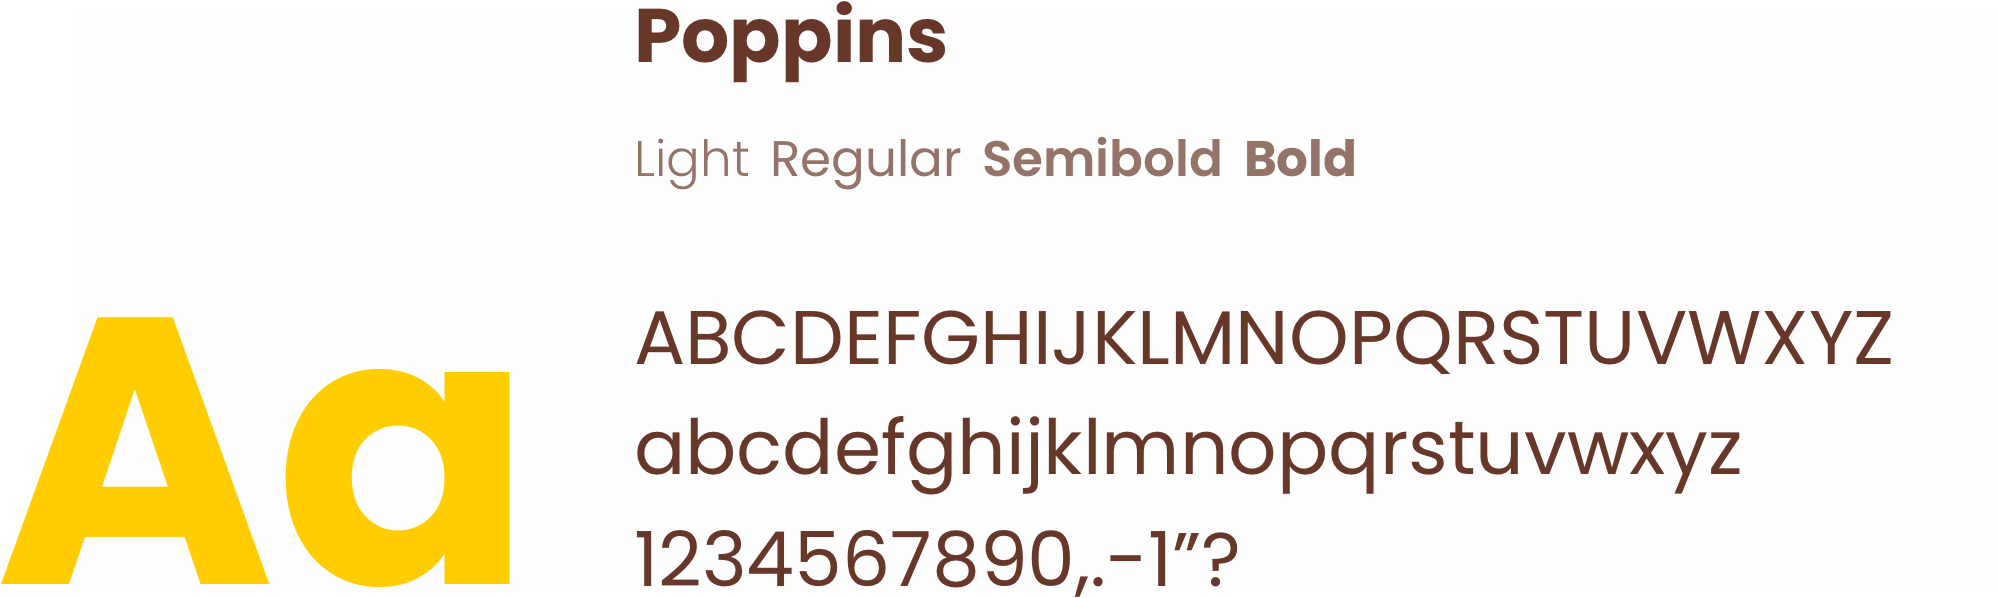 2-typeface-caffarel@2x